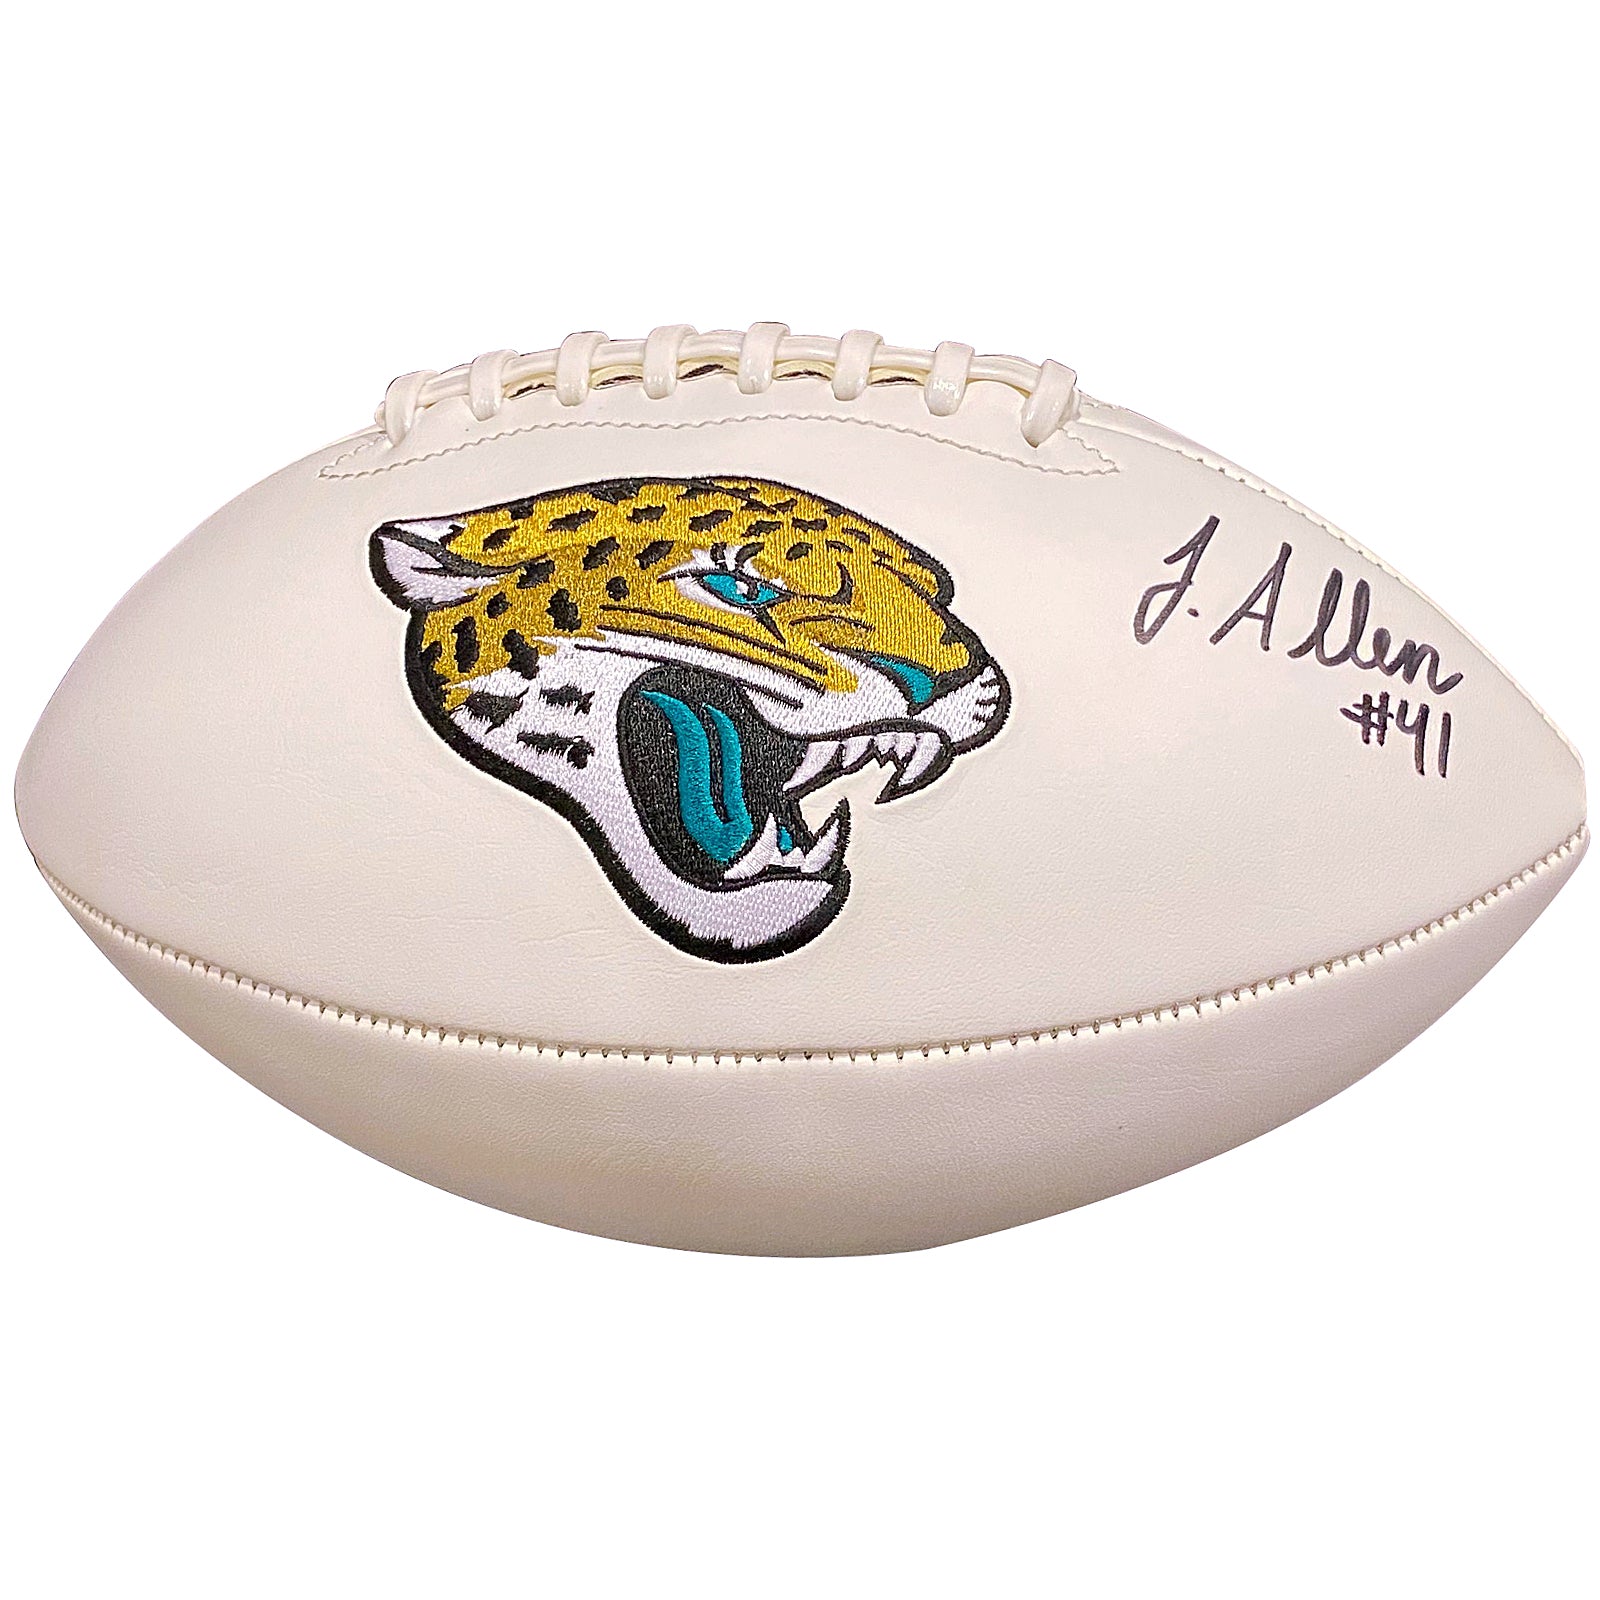 Josh Allen Autographed Jacksonville Jaguars Logo Football